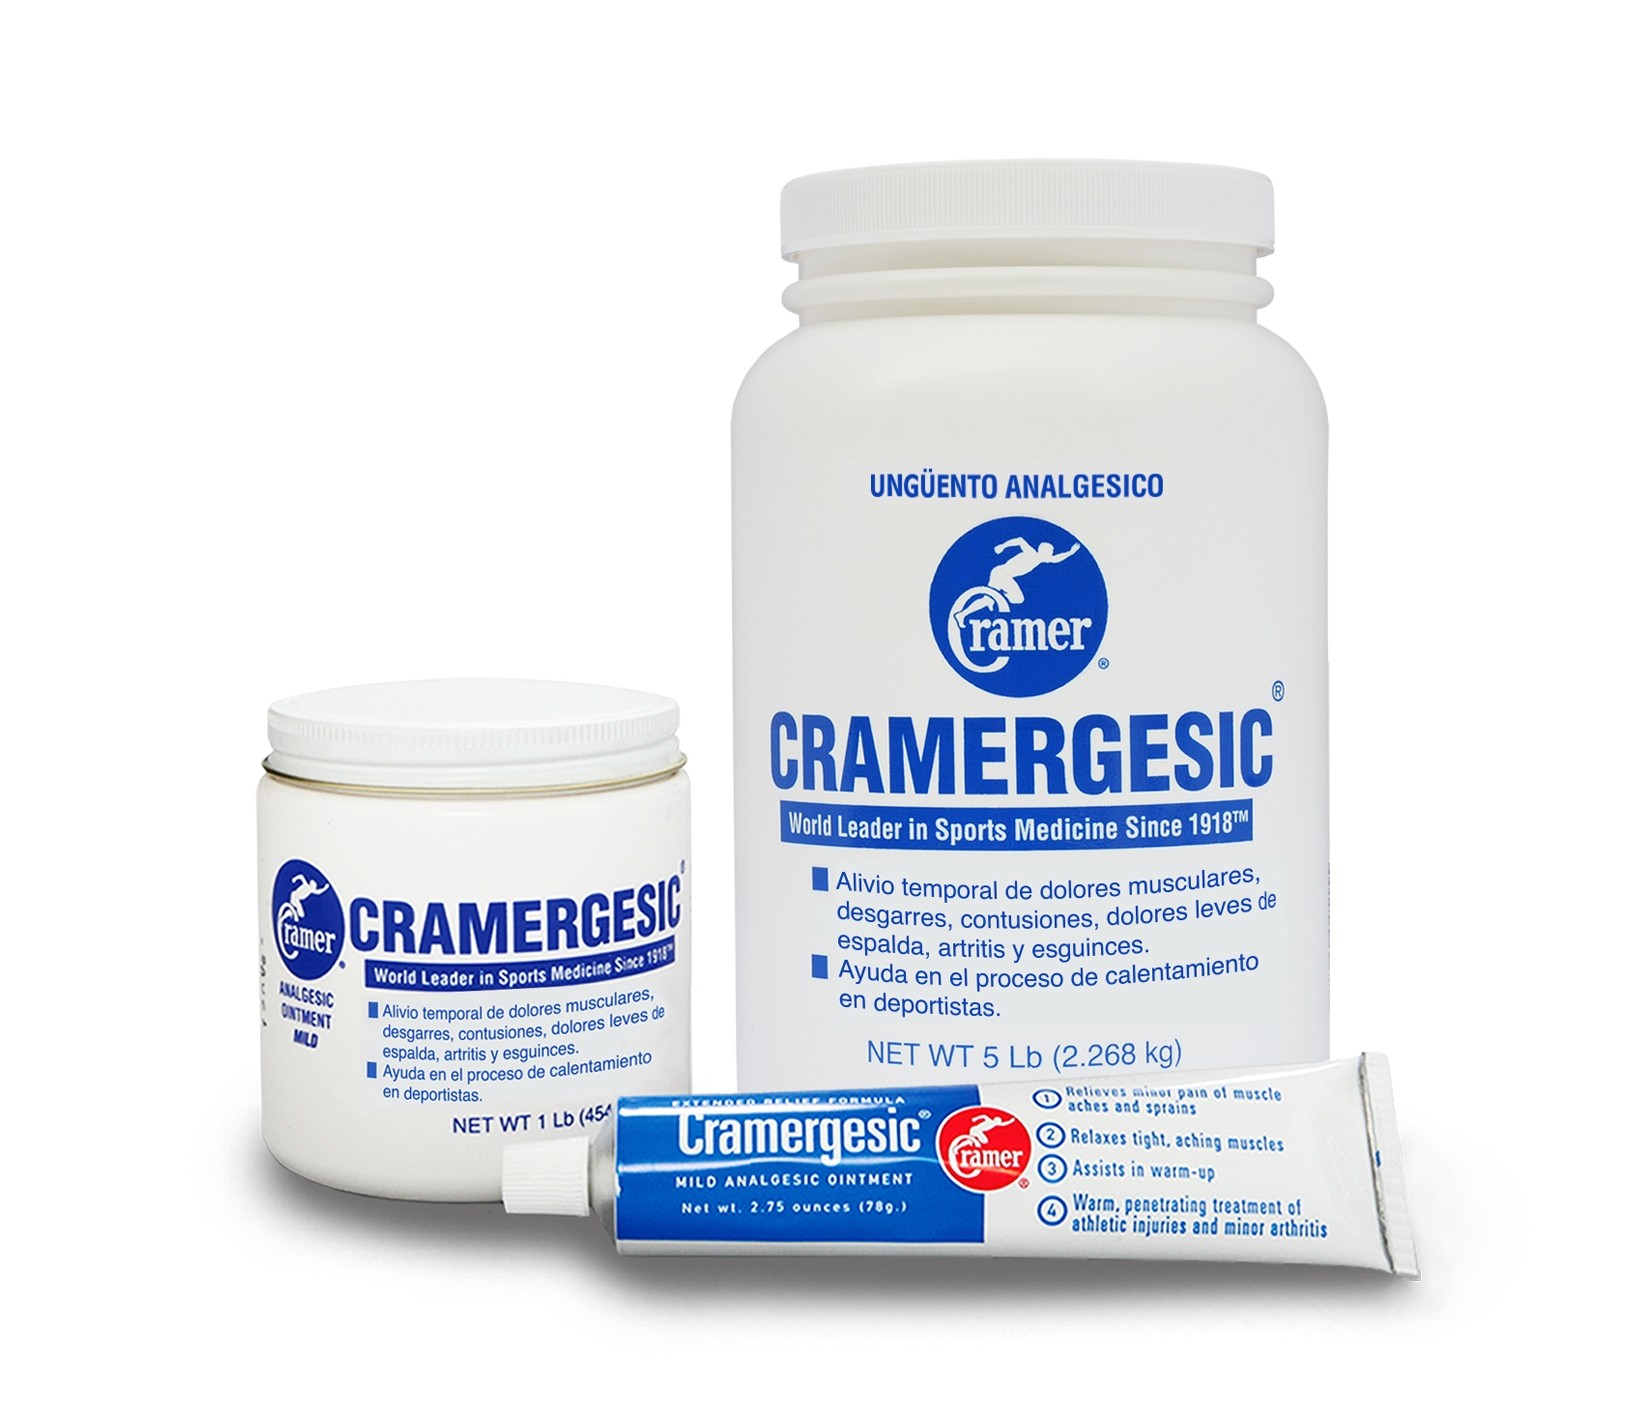 Cramergesic™ Ointment